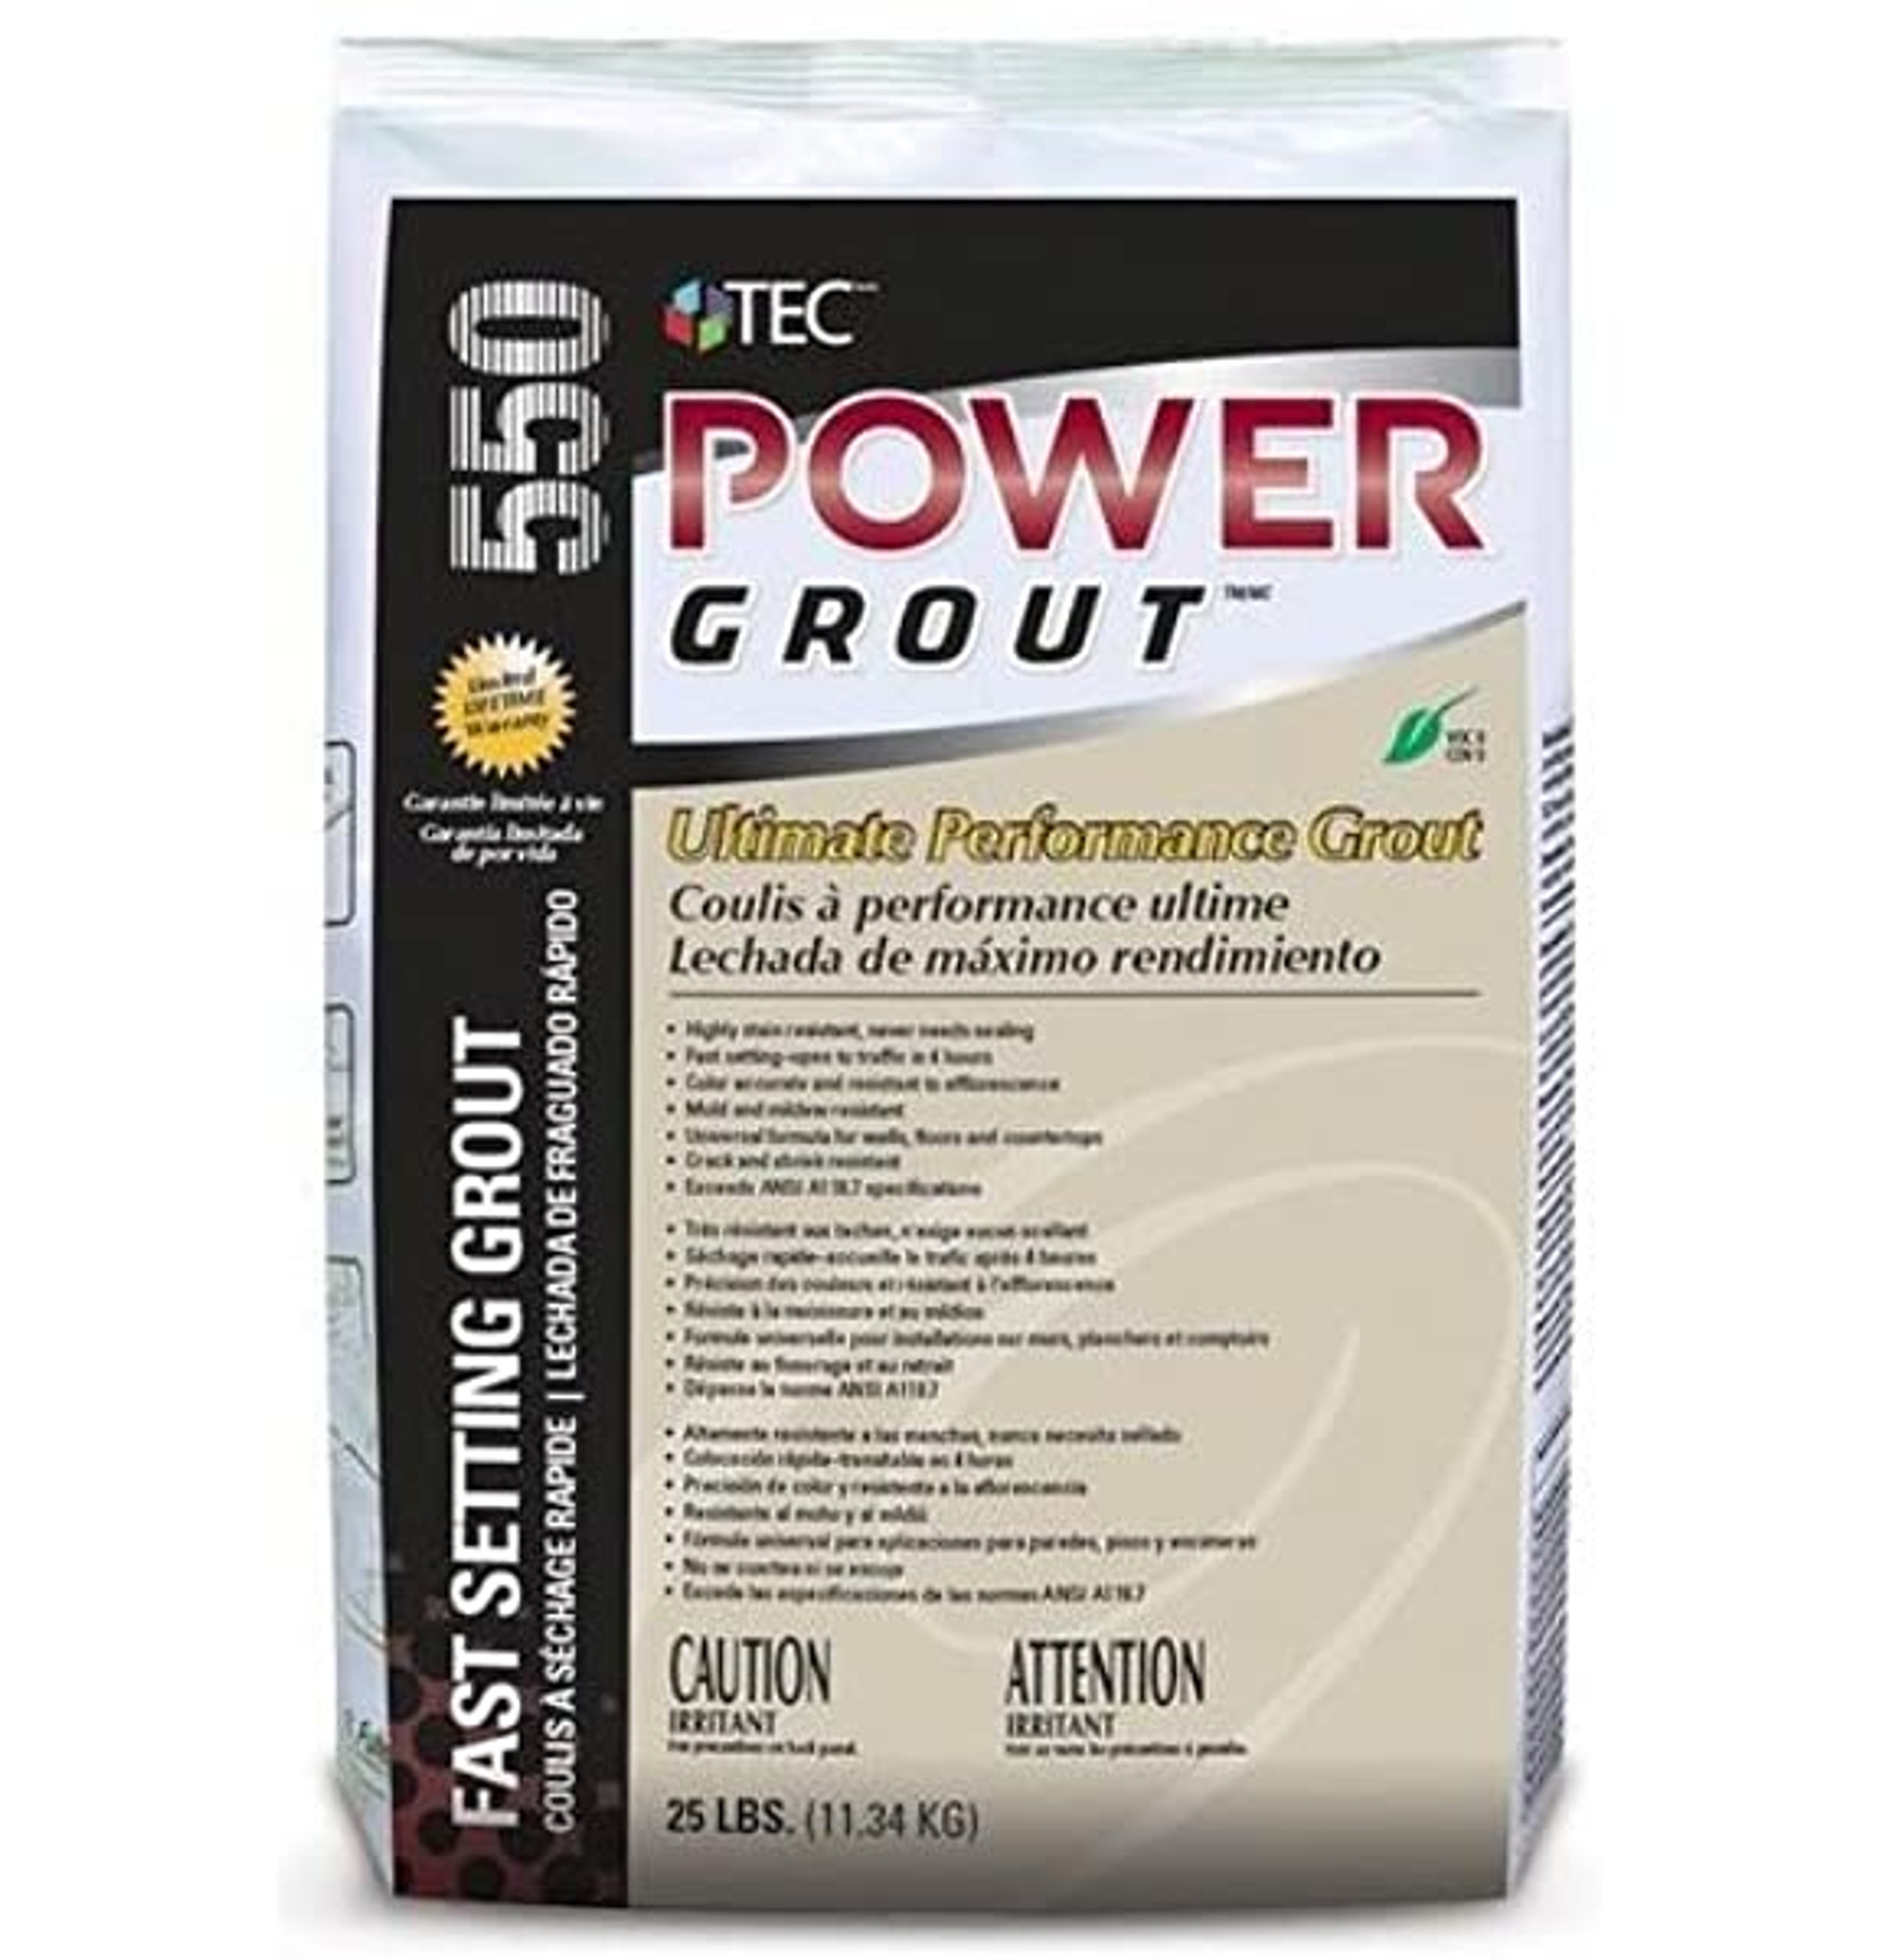 TEC Power Grout 550 Antique White #940- 25 lbs Tec Power Grout